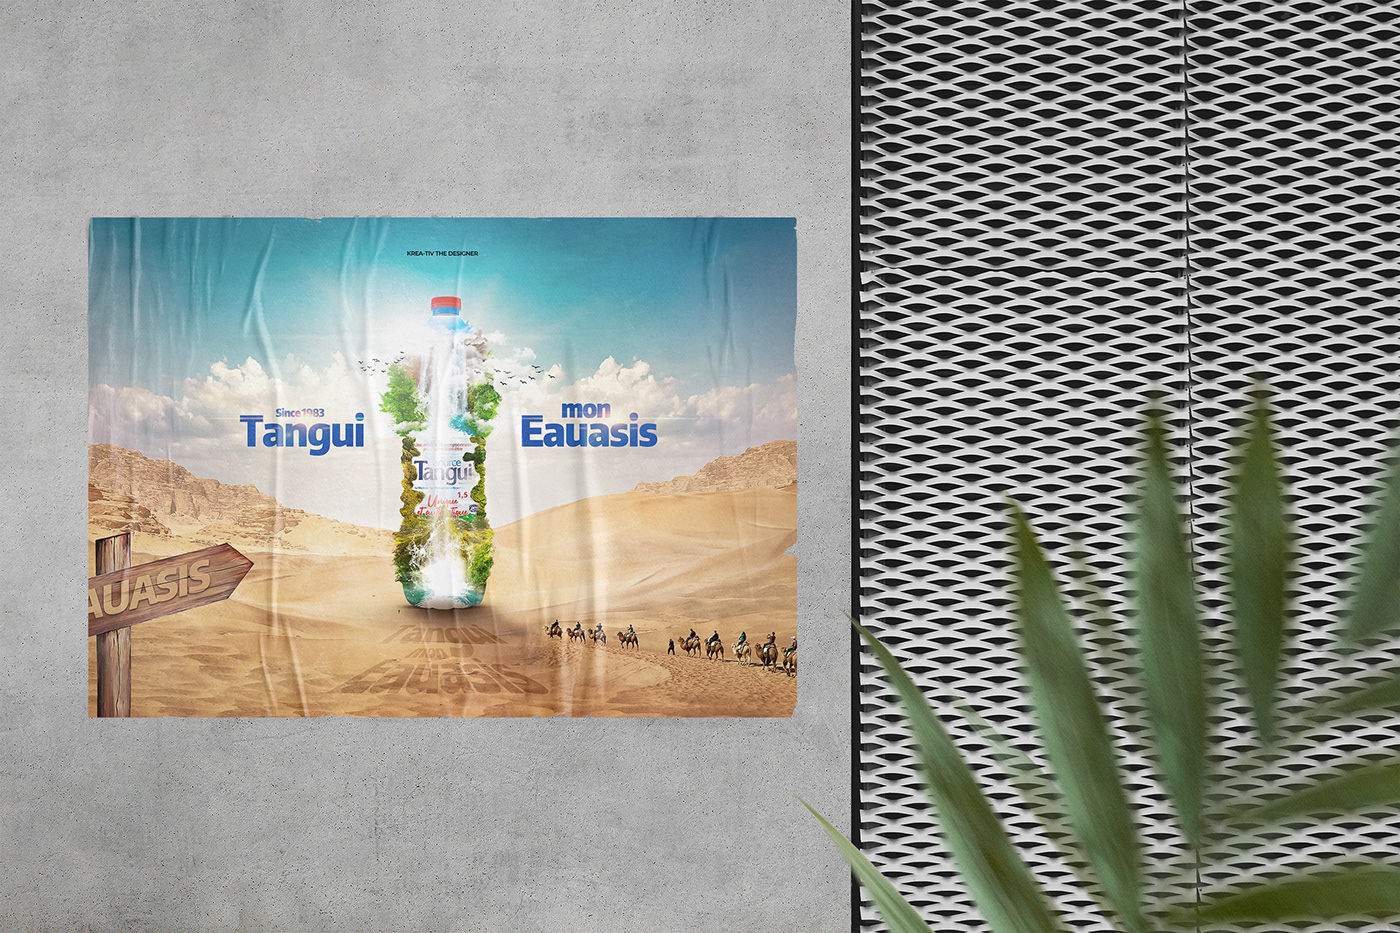 Advertising  bottle drink mineral water outdoor advertising photomanipulation photomontage print design  Social media post